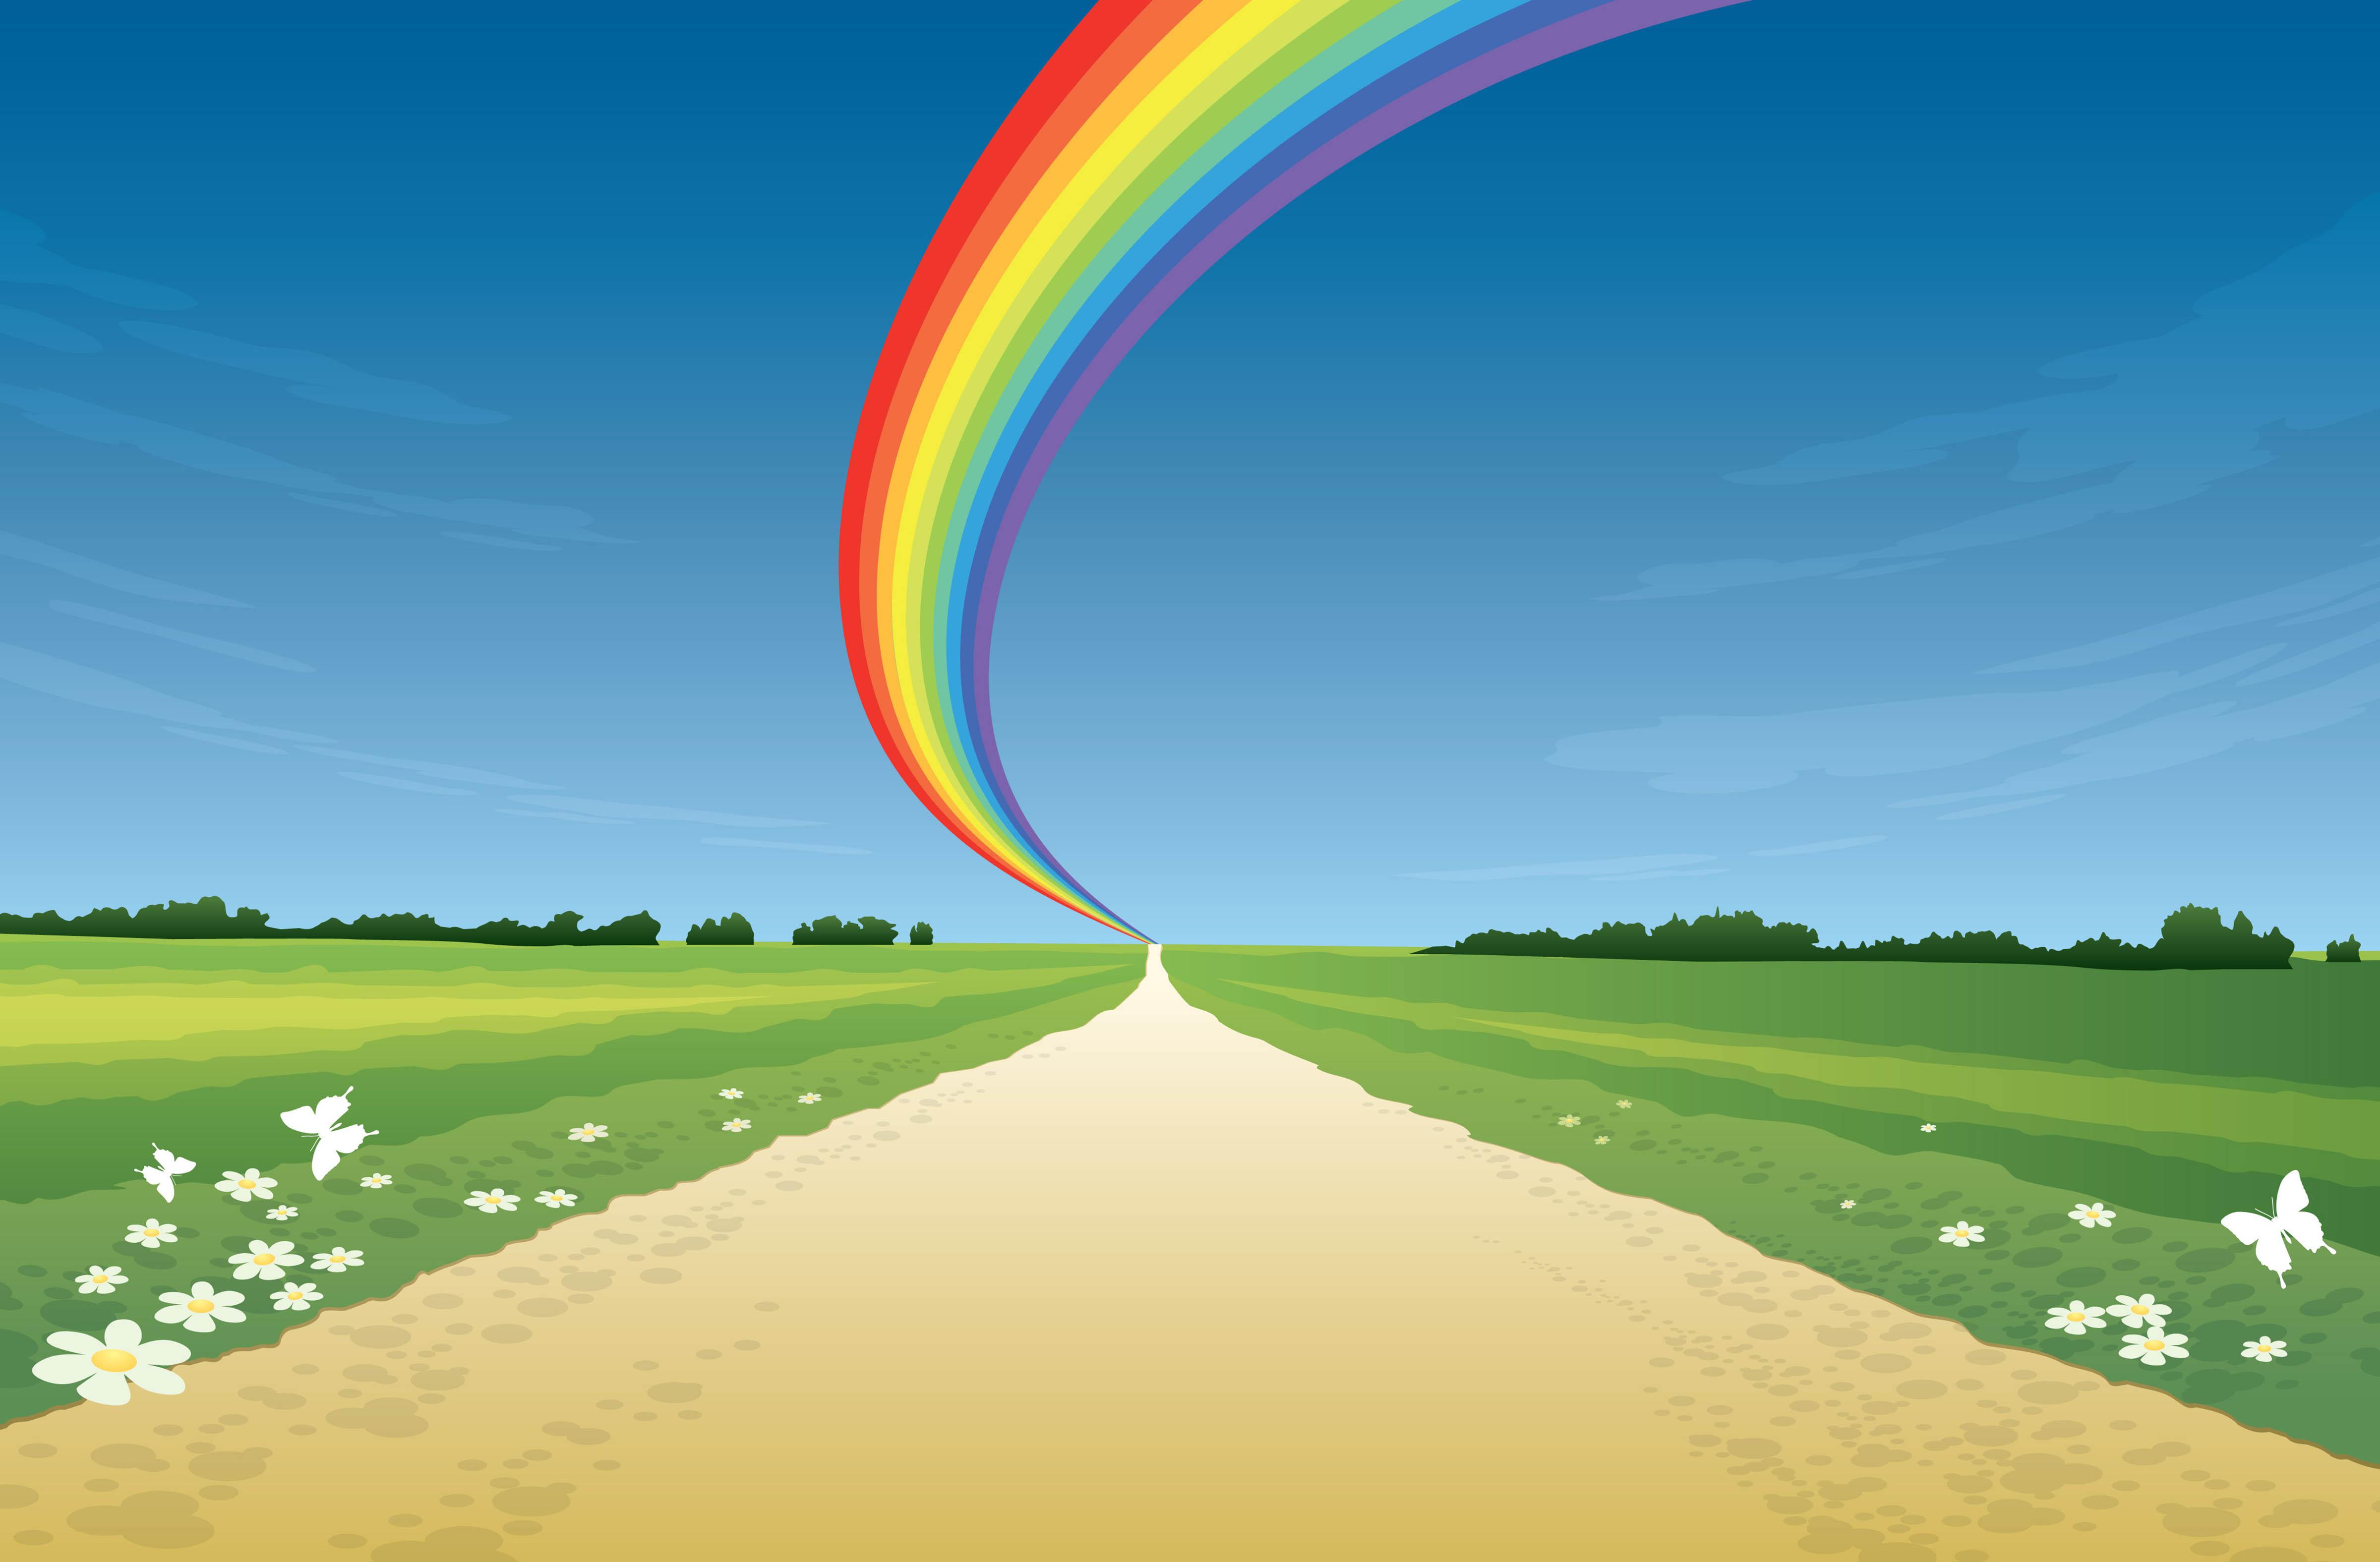 Download wallpaper: road, green Grass, Rainbow, blue Sky, download photo